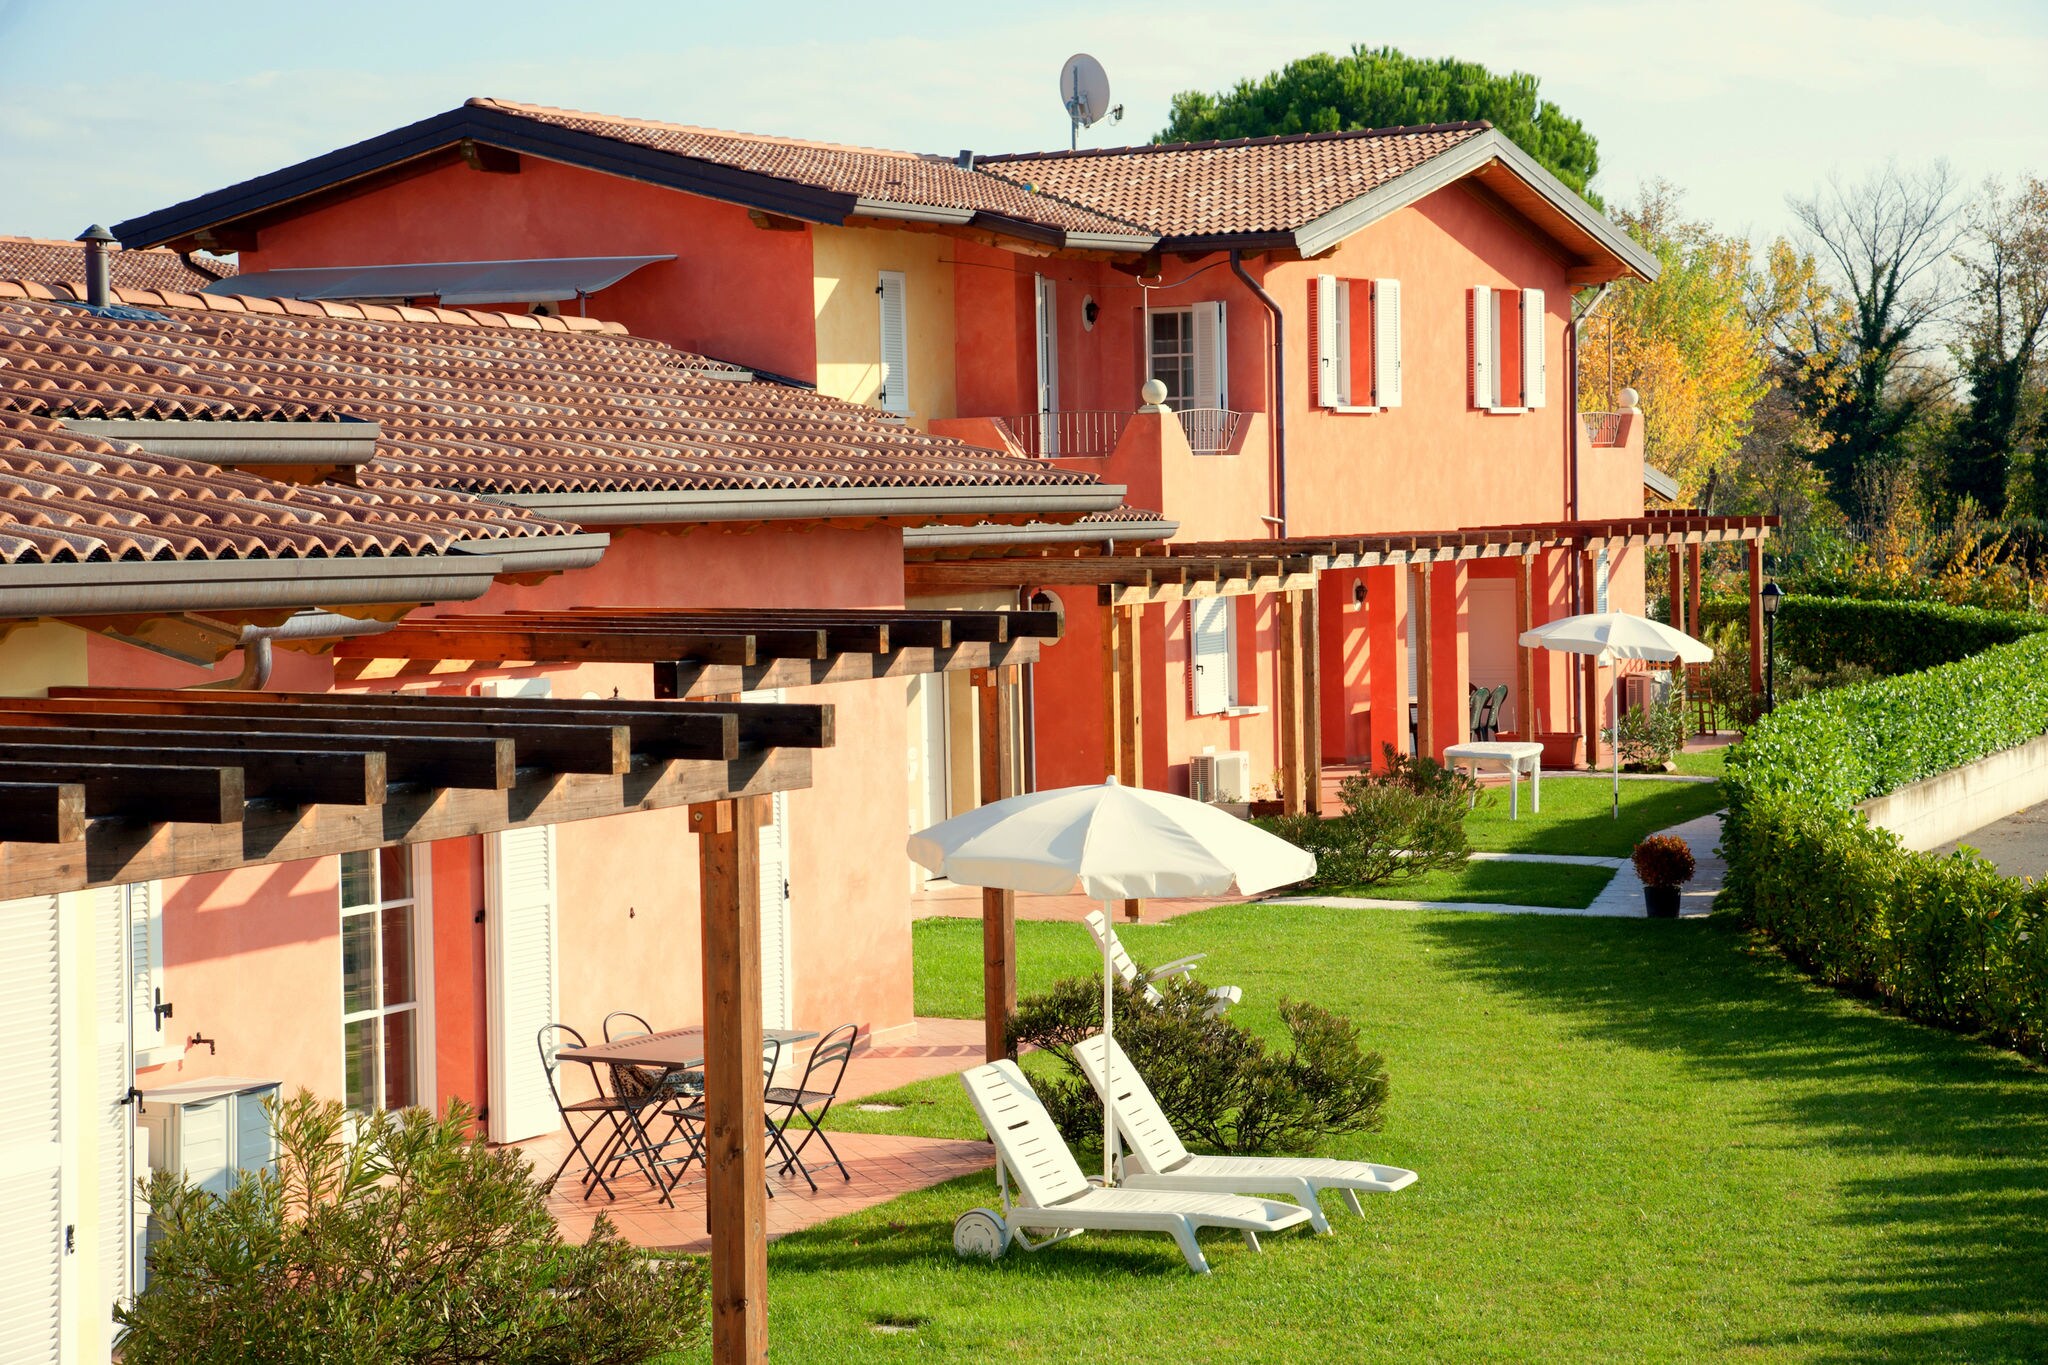 Jolie maison de vacances avec piscine à Manerba del Garda